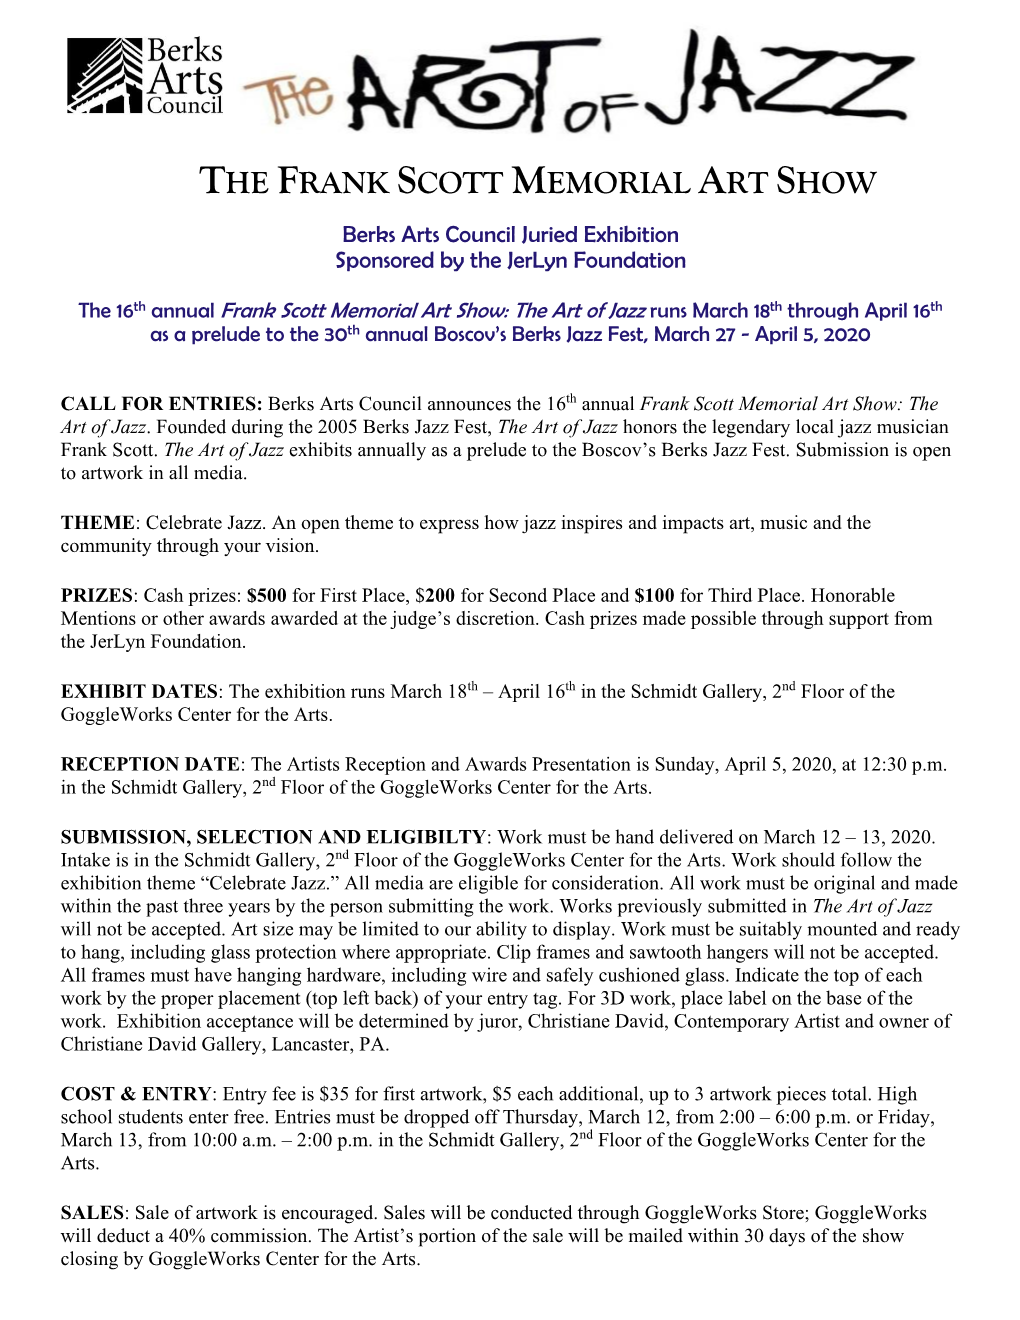 The Frank Scott Memorial Art Show